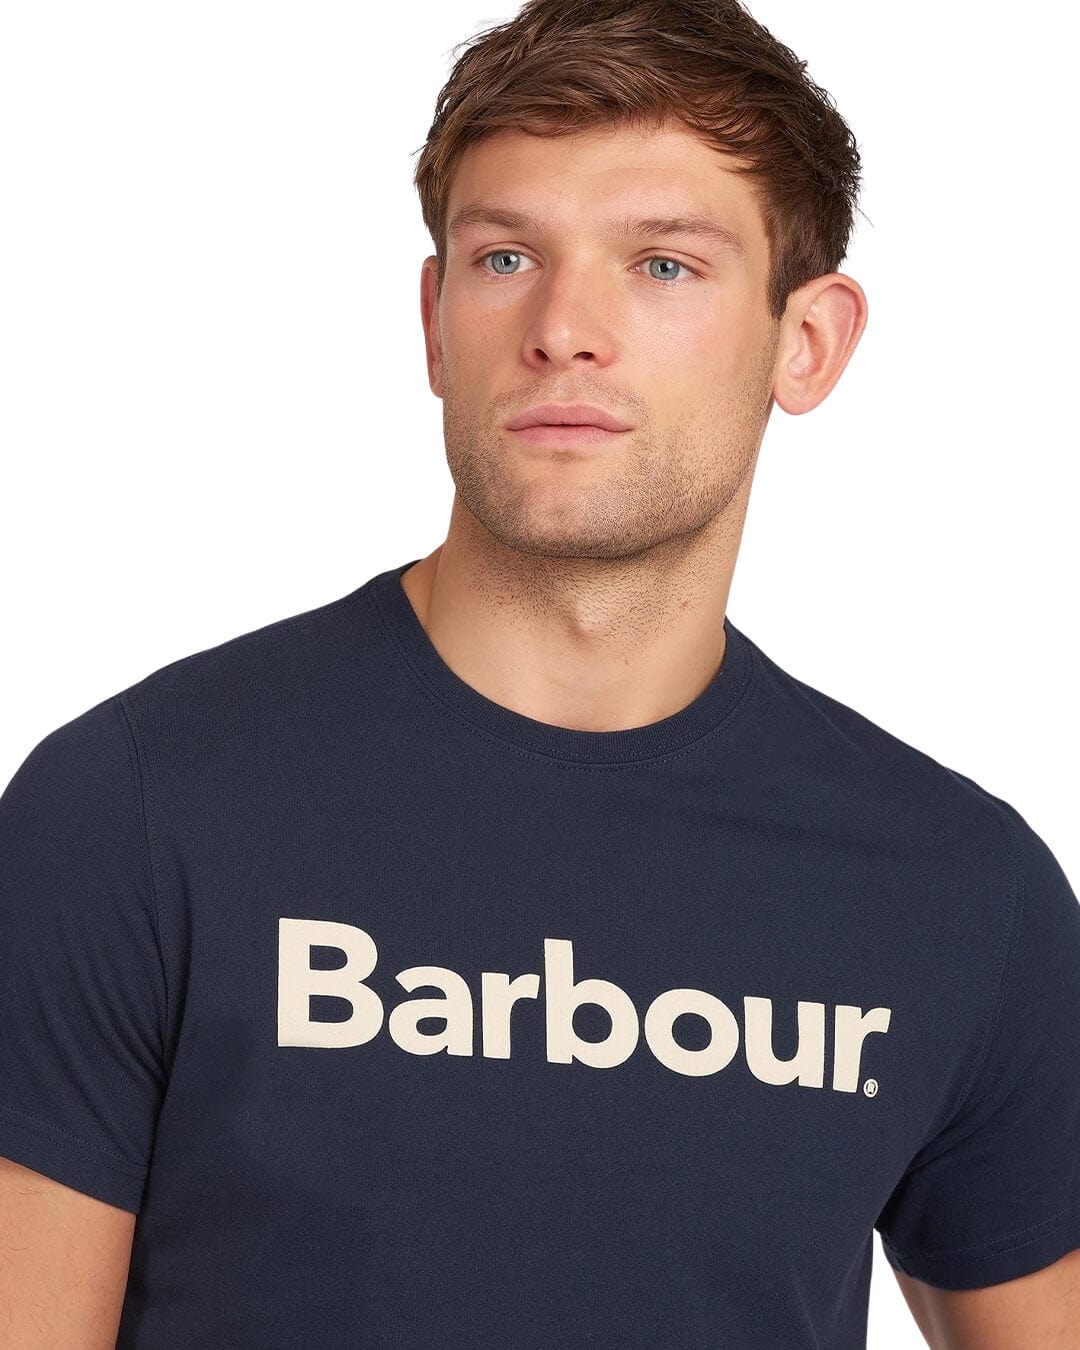 Barbour T-Shirts Barbour Logo Navy T-Shirt